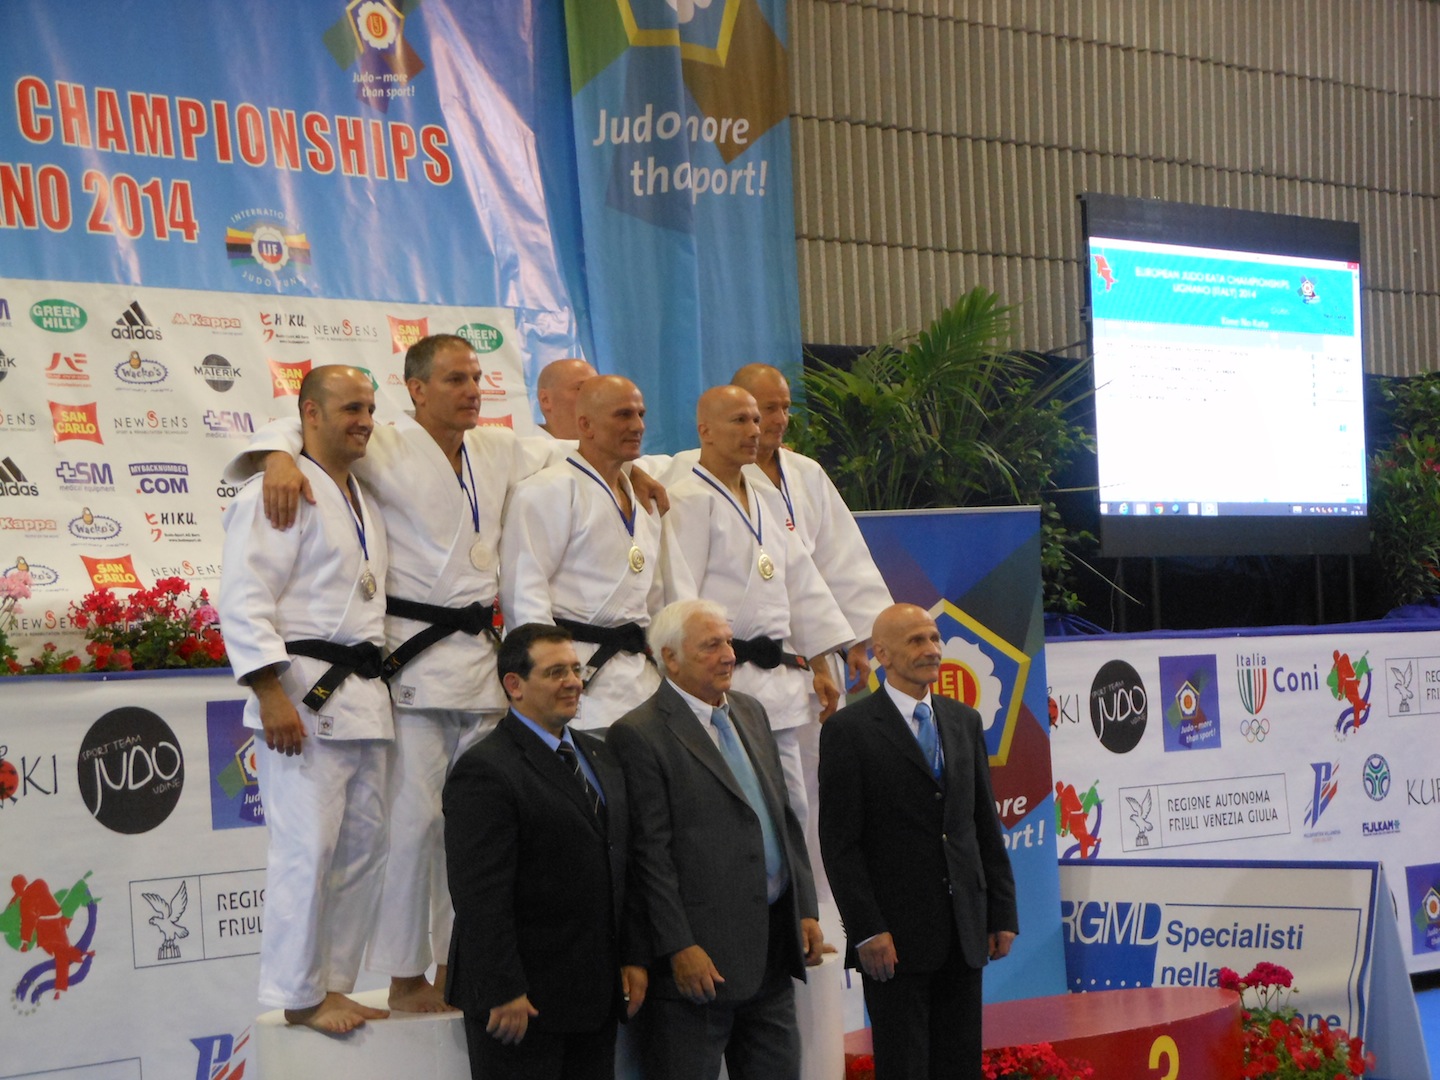 /immagini/Judo/2014/DSCN6304.JPG